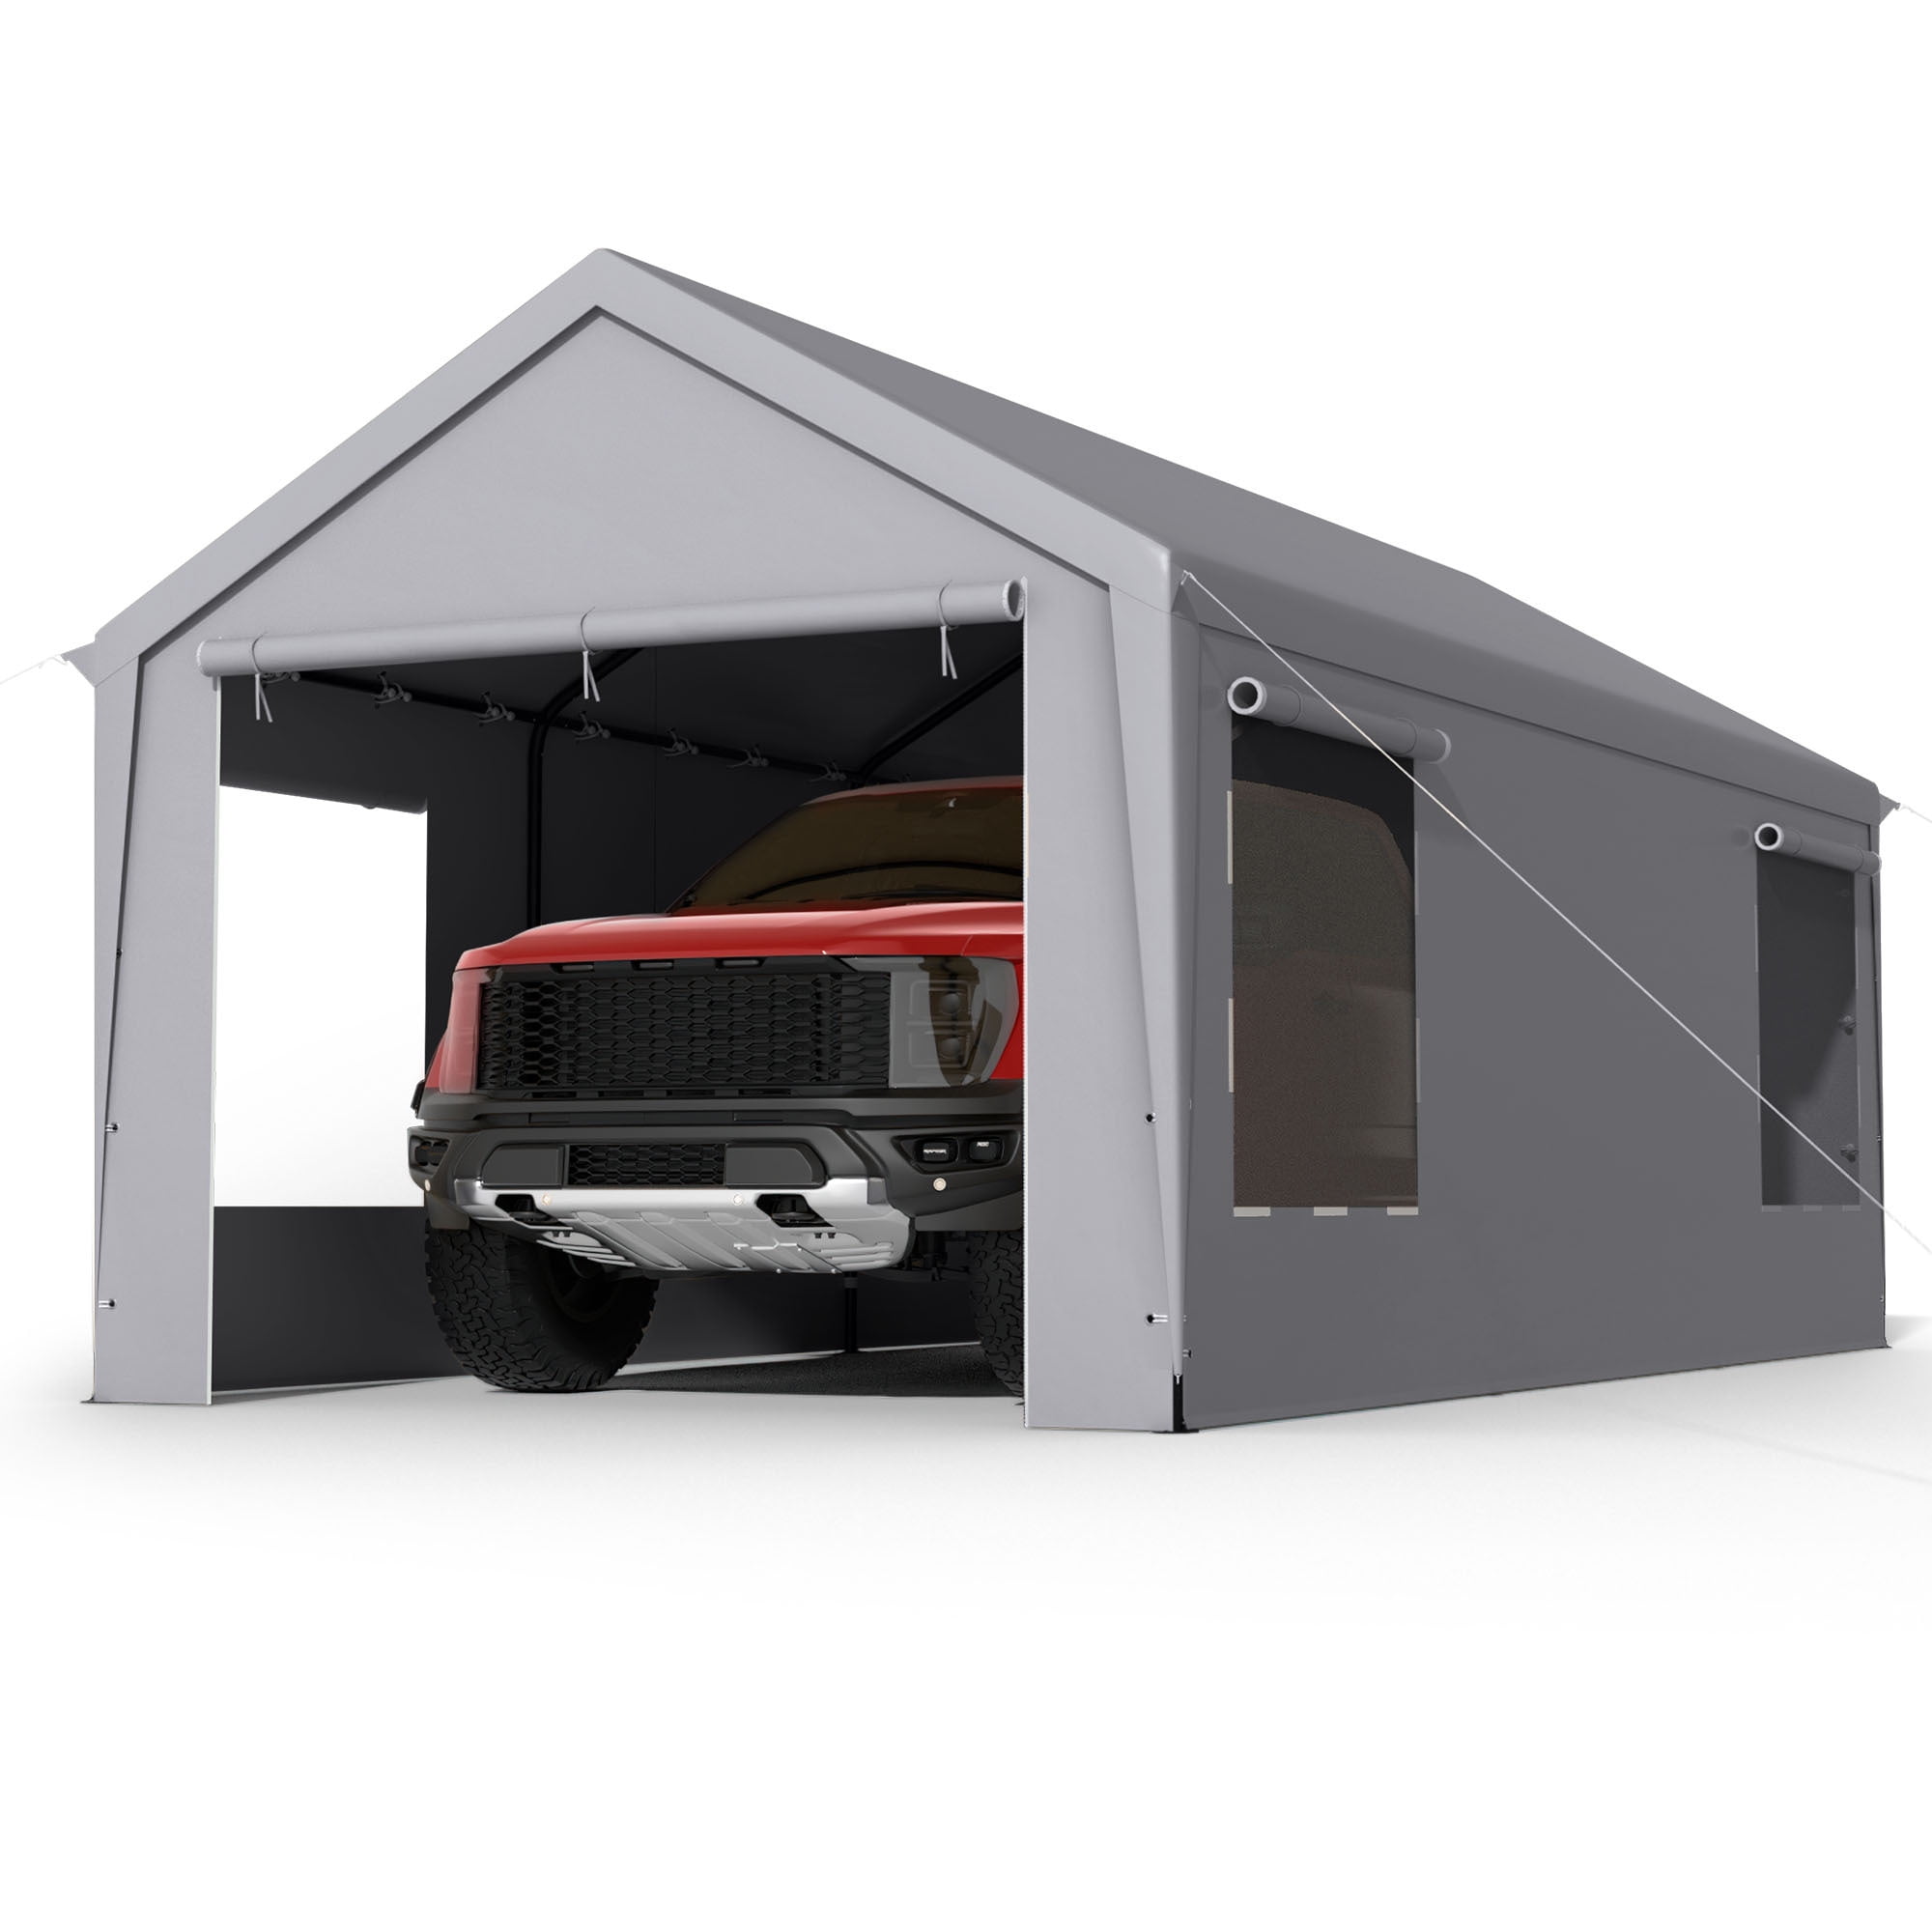 SERWALL 12 x 20 ft Heavy Duty Steel Car Carport Canopy Tents with ...